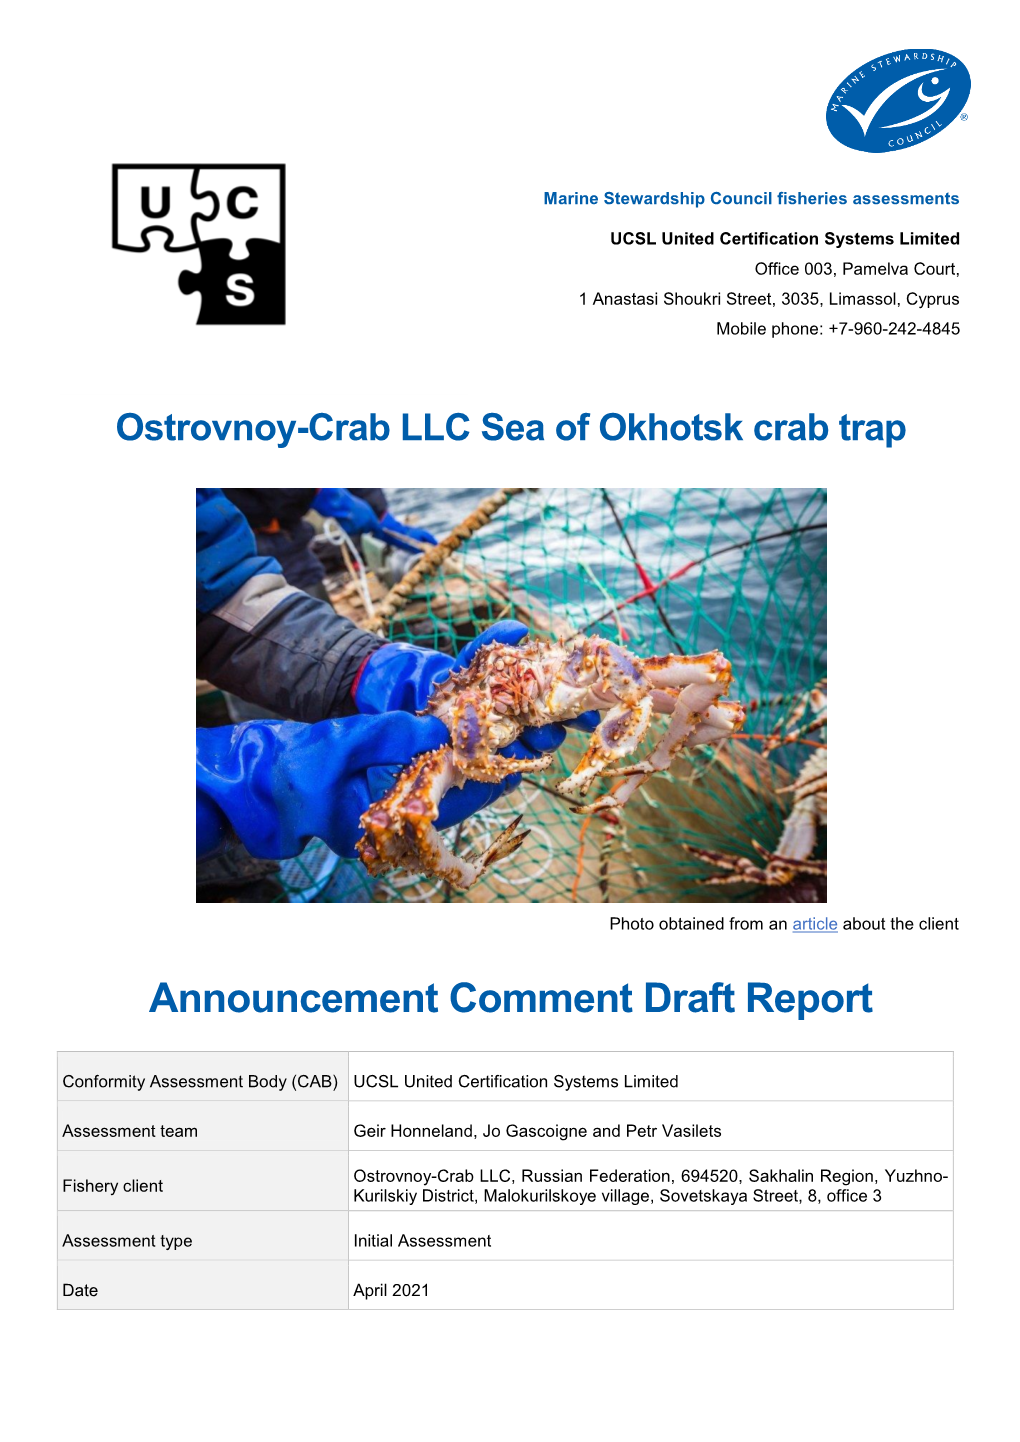 Ostrovnoy-Crab LLC Sea of Okhotsk Crab Trap